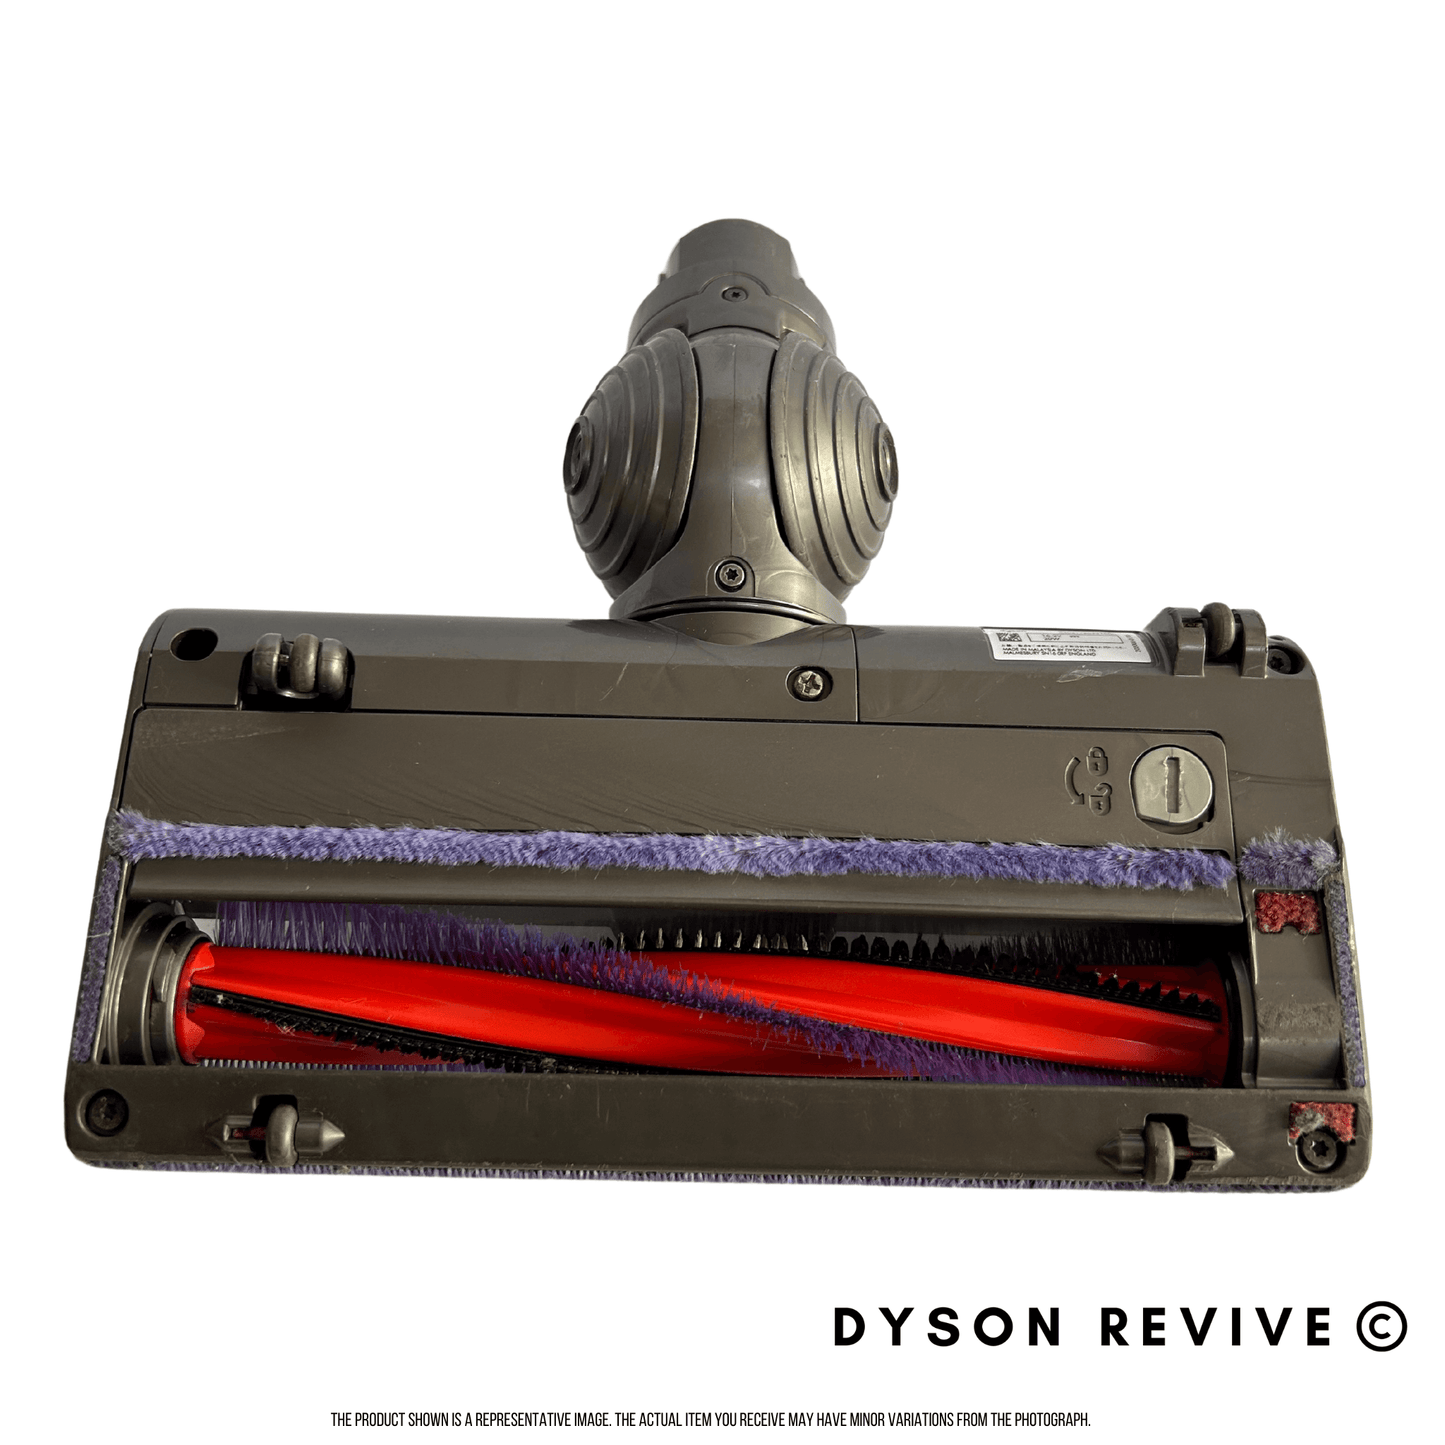 Genuine Dyson Refurbished Carbon Powerhead Motorhead For Dyson V6 Slim and Slim Origin Dyson Vacuums - Dyson Revive